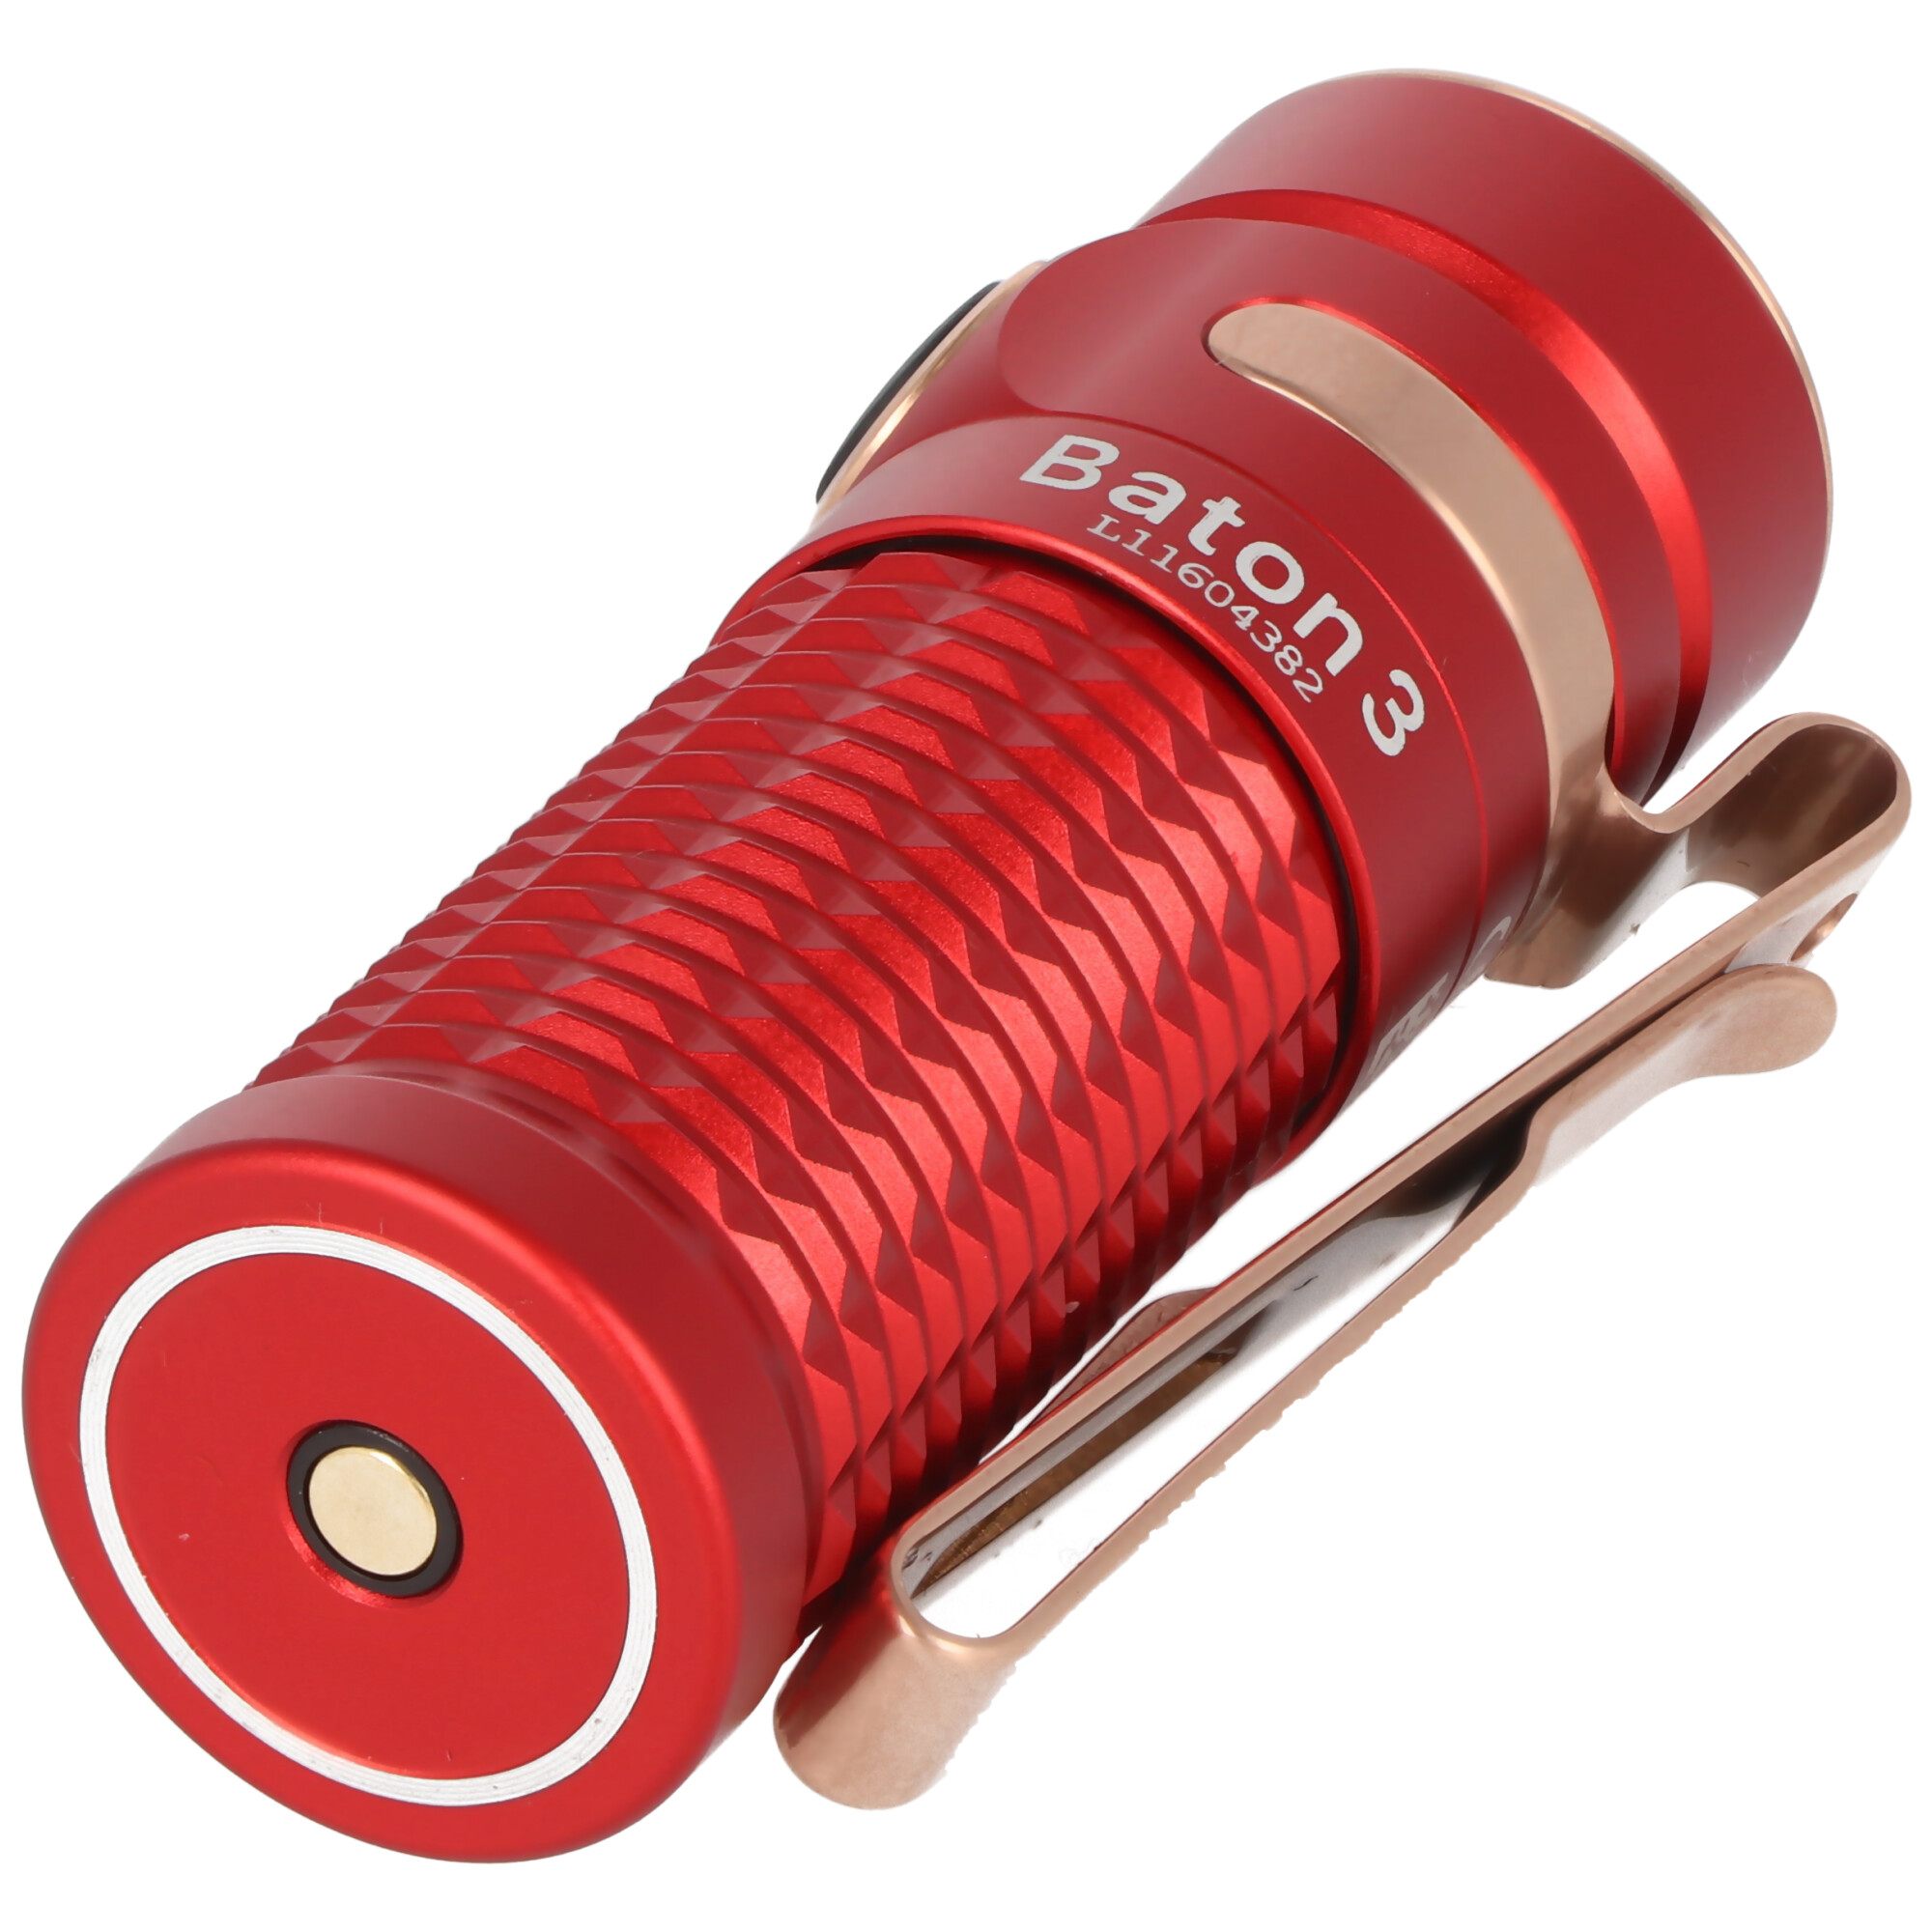 Olight Baton 3 Premium Edition, LED-Taschenlampe Baton 3 mit Ladecase rot, drahtloses Laden, inklusive Akku und Baton 3 Ladecase rot